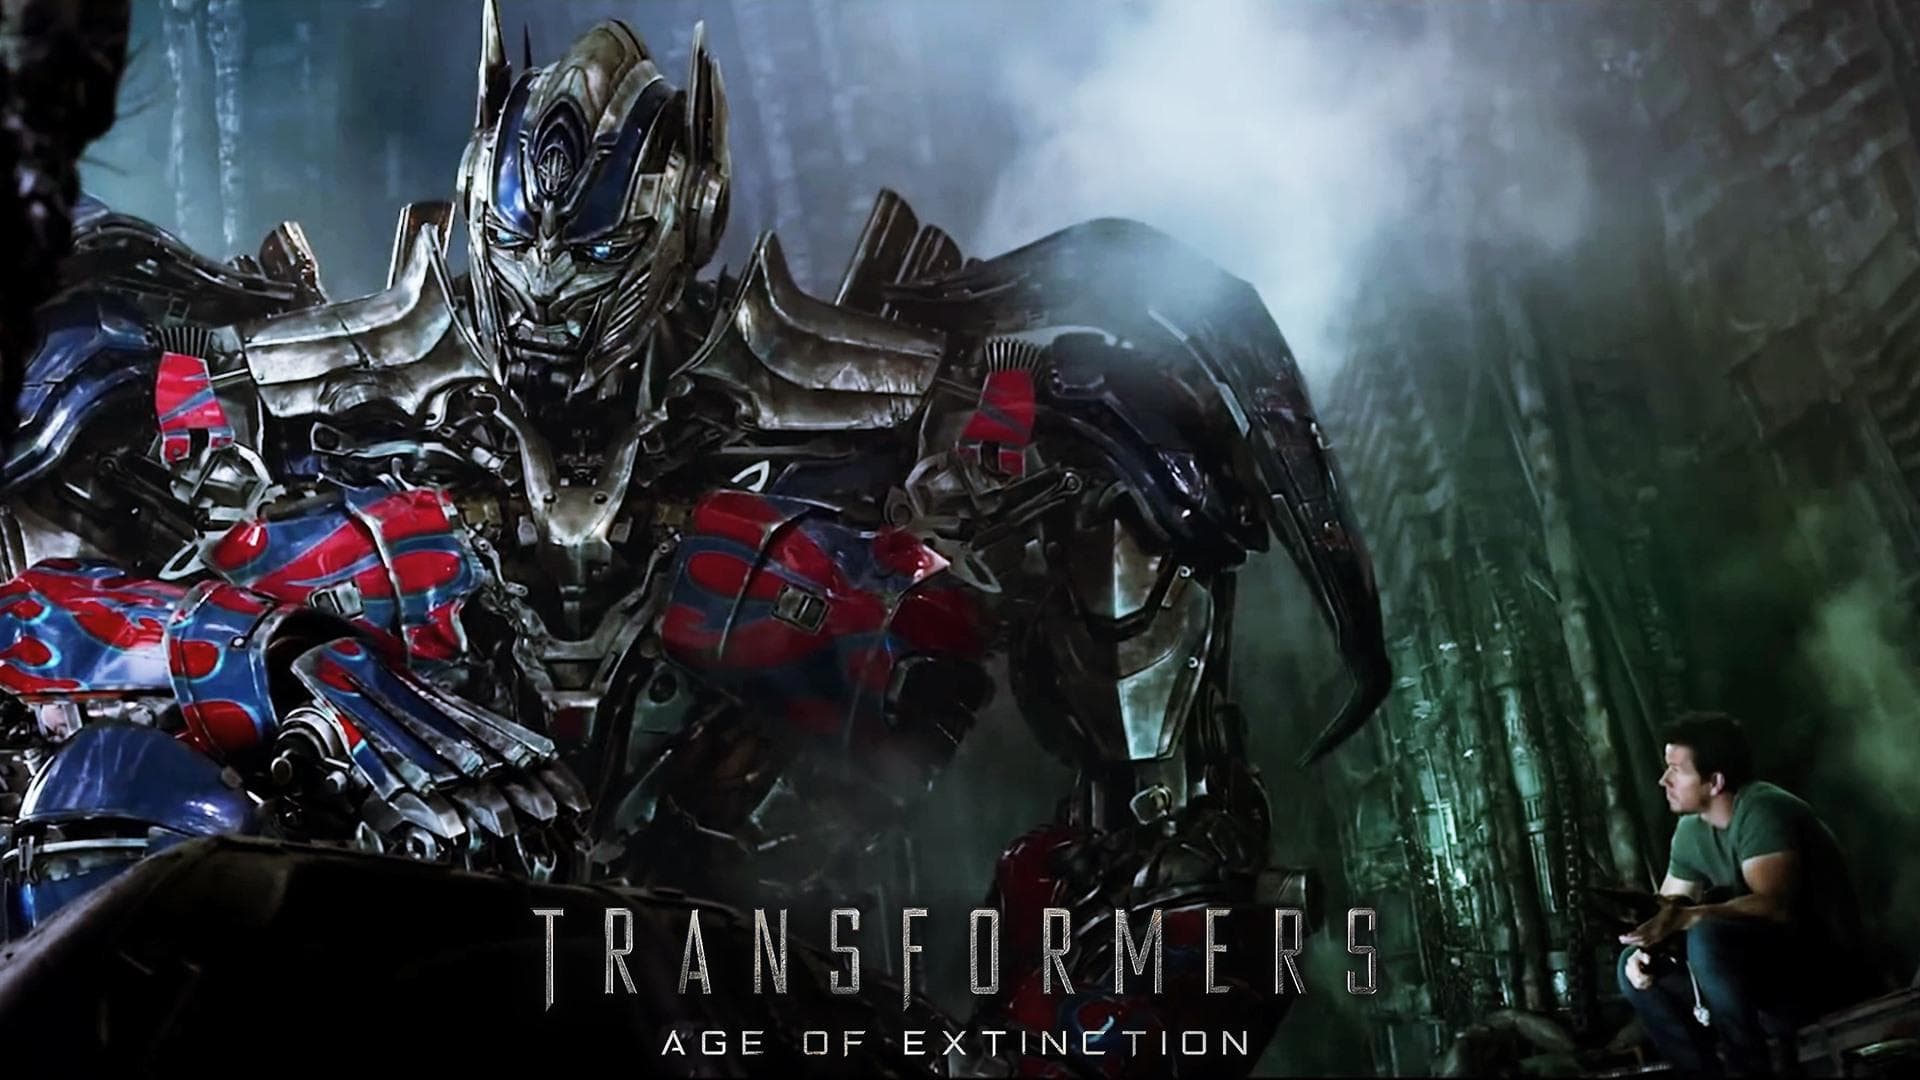 Amazoncom: Transformers: Age of Extinction: Mark Wahlberg